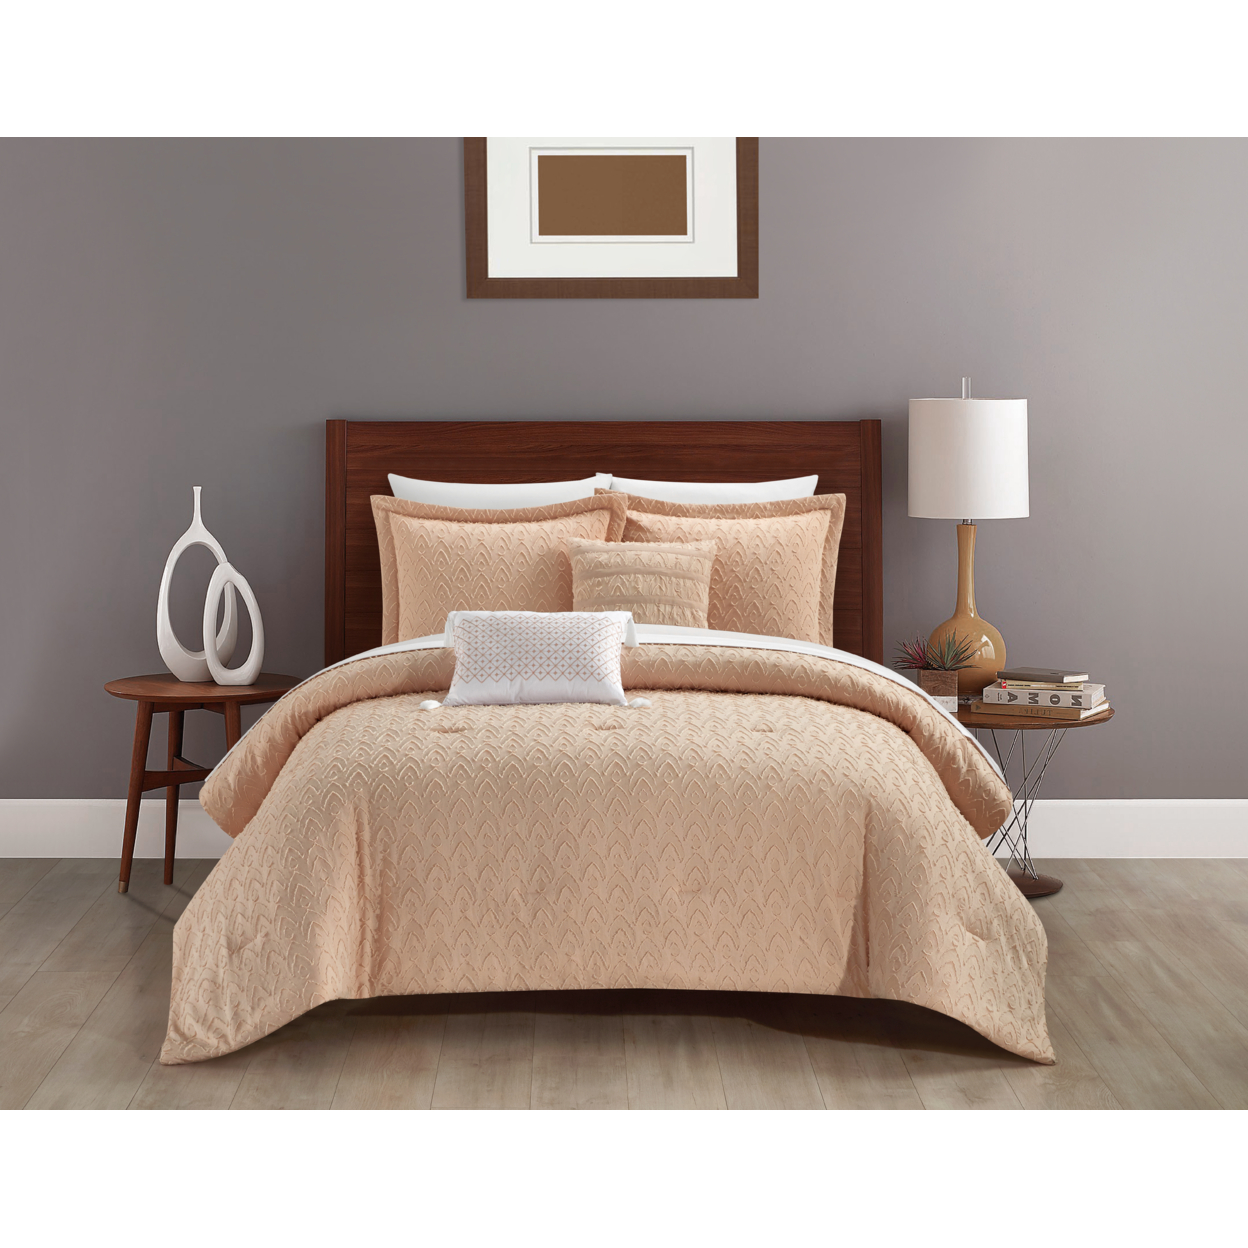 Deign 5 Piece Comforter Set Clip Jacquard Geometric Pattern Design Bedding - Mustard, Queen